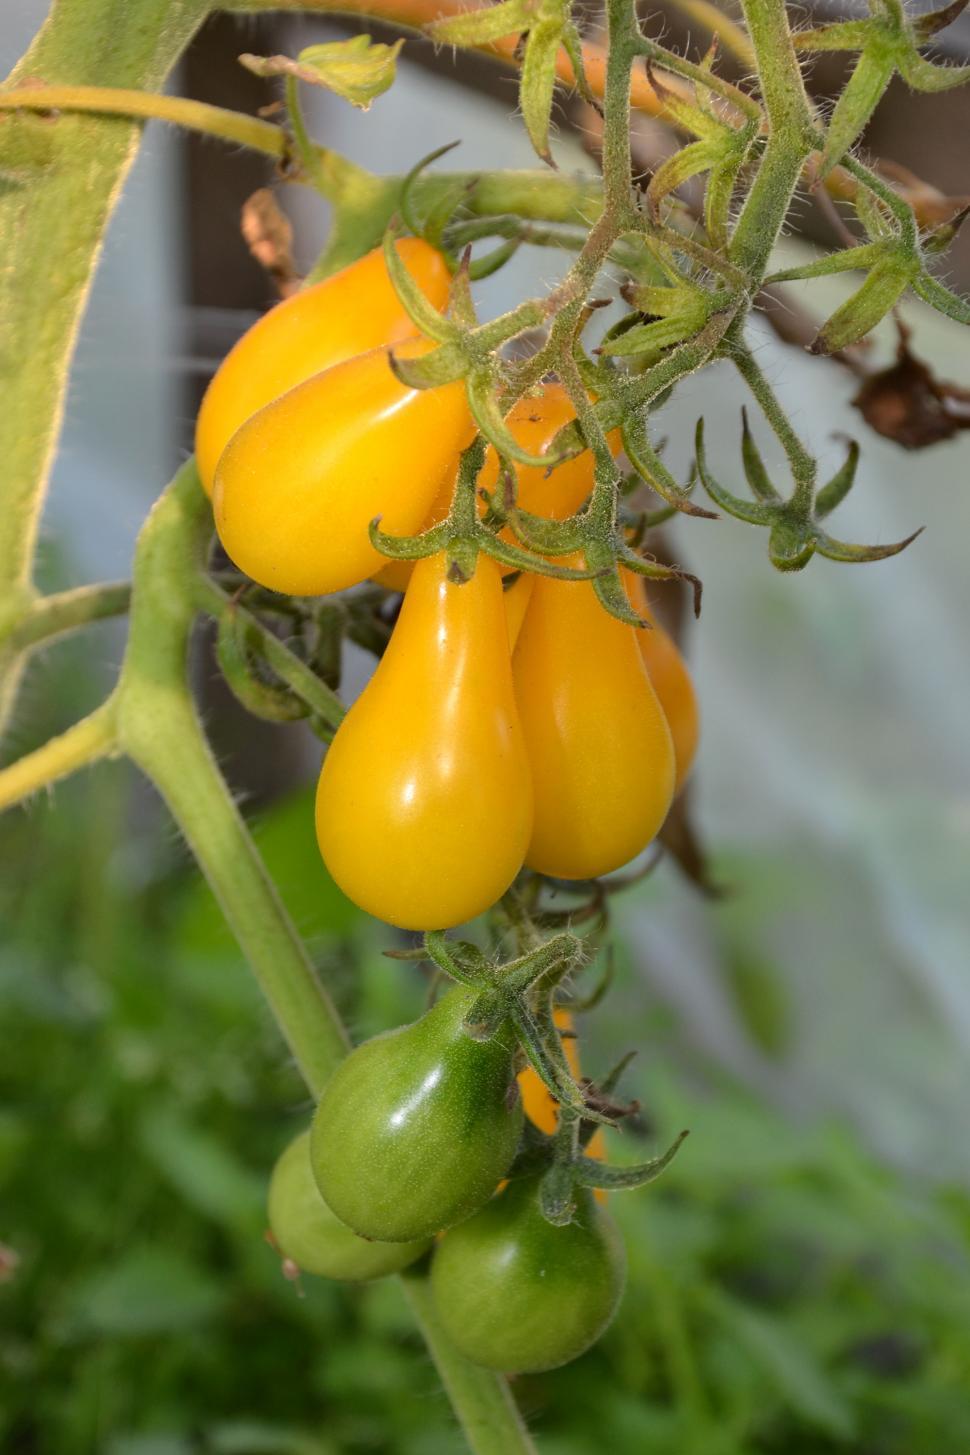 Free Image of Yellow plum tomatoes 